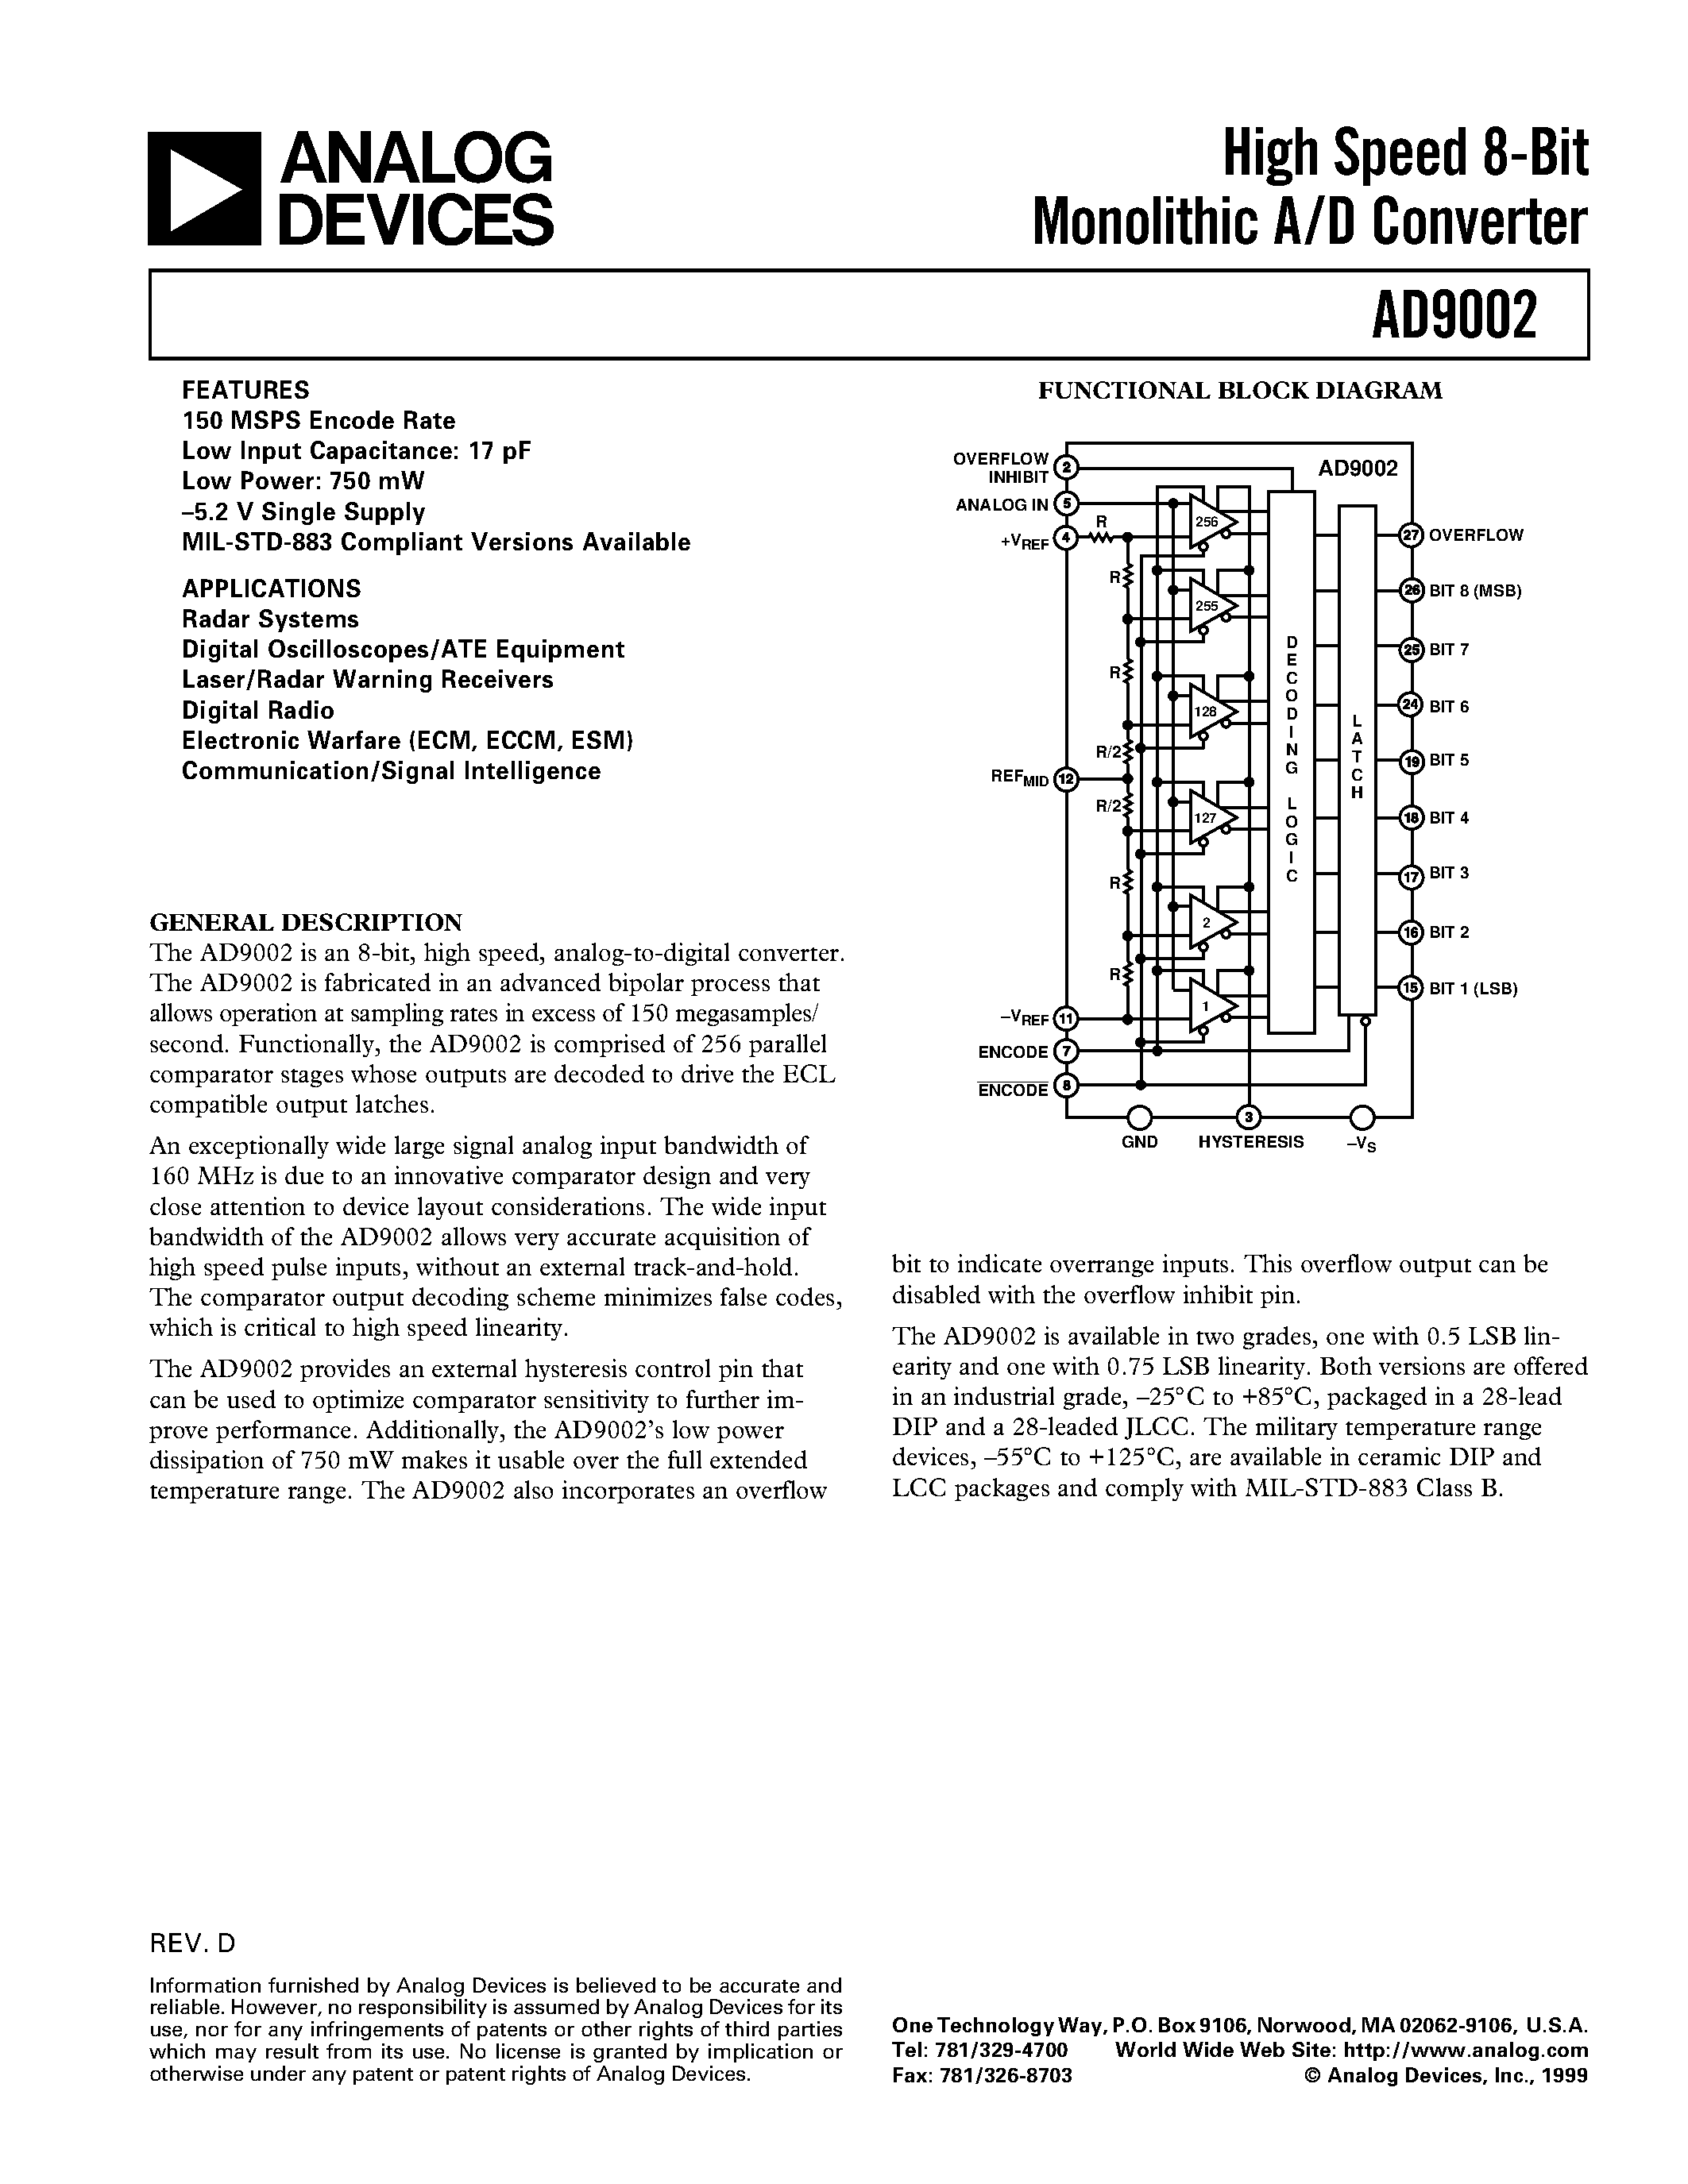 Даташит AD9002BJ - High Speed 8-Bit Monolithic A/D Converter страница 1